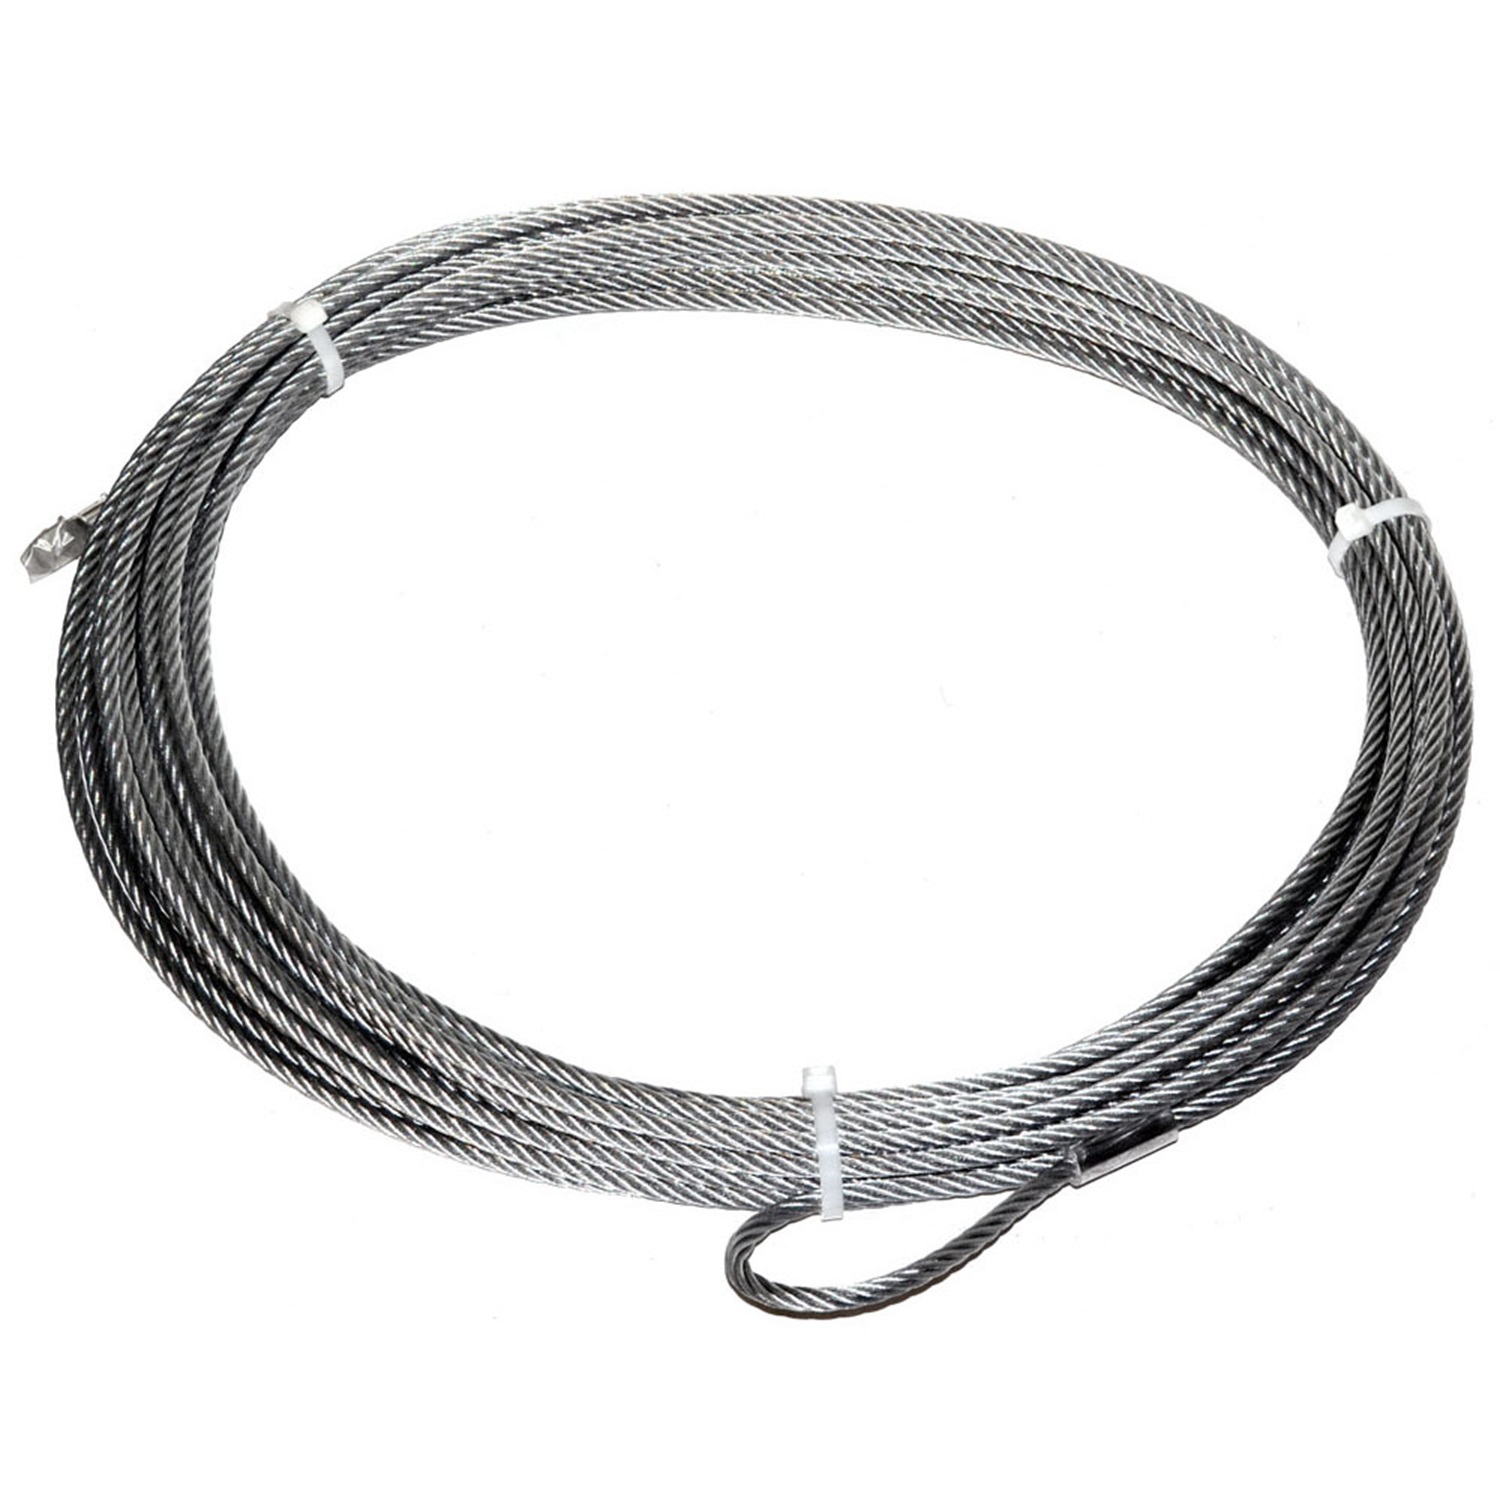 Warn Warn 15276 Wire Rope